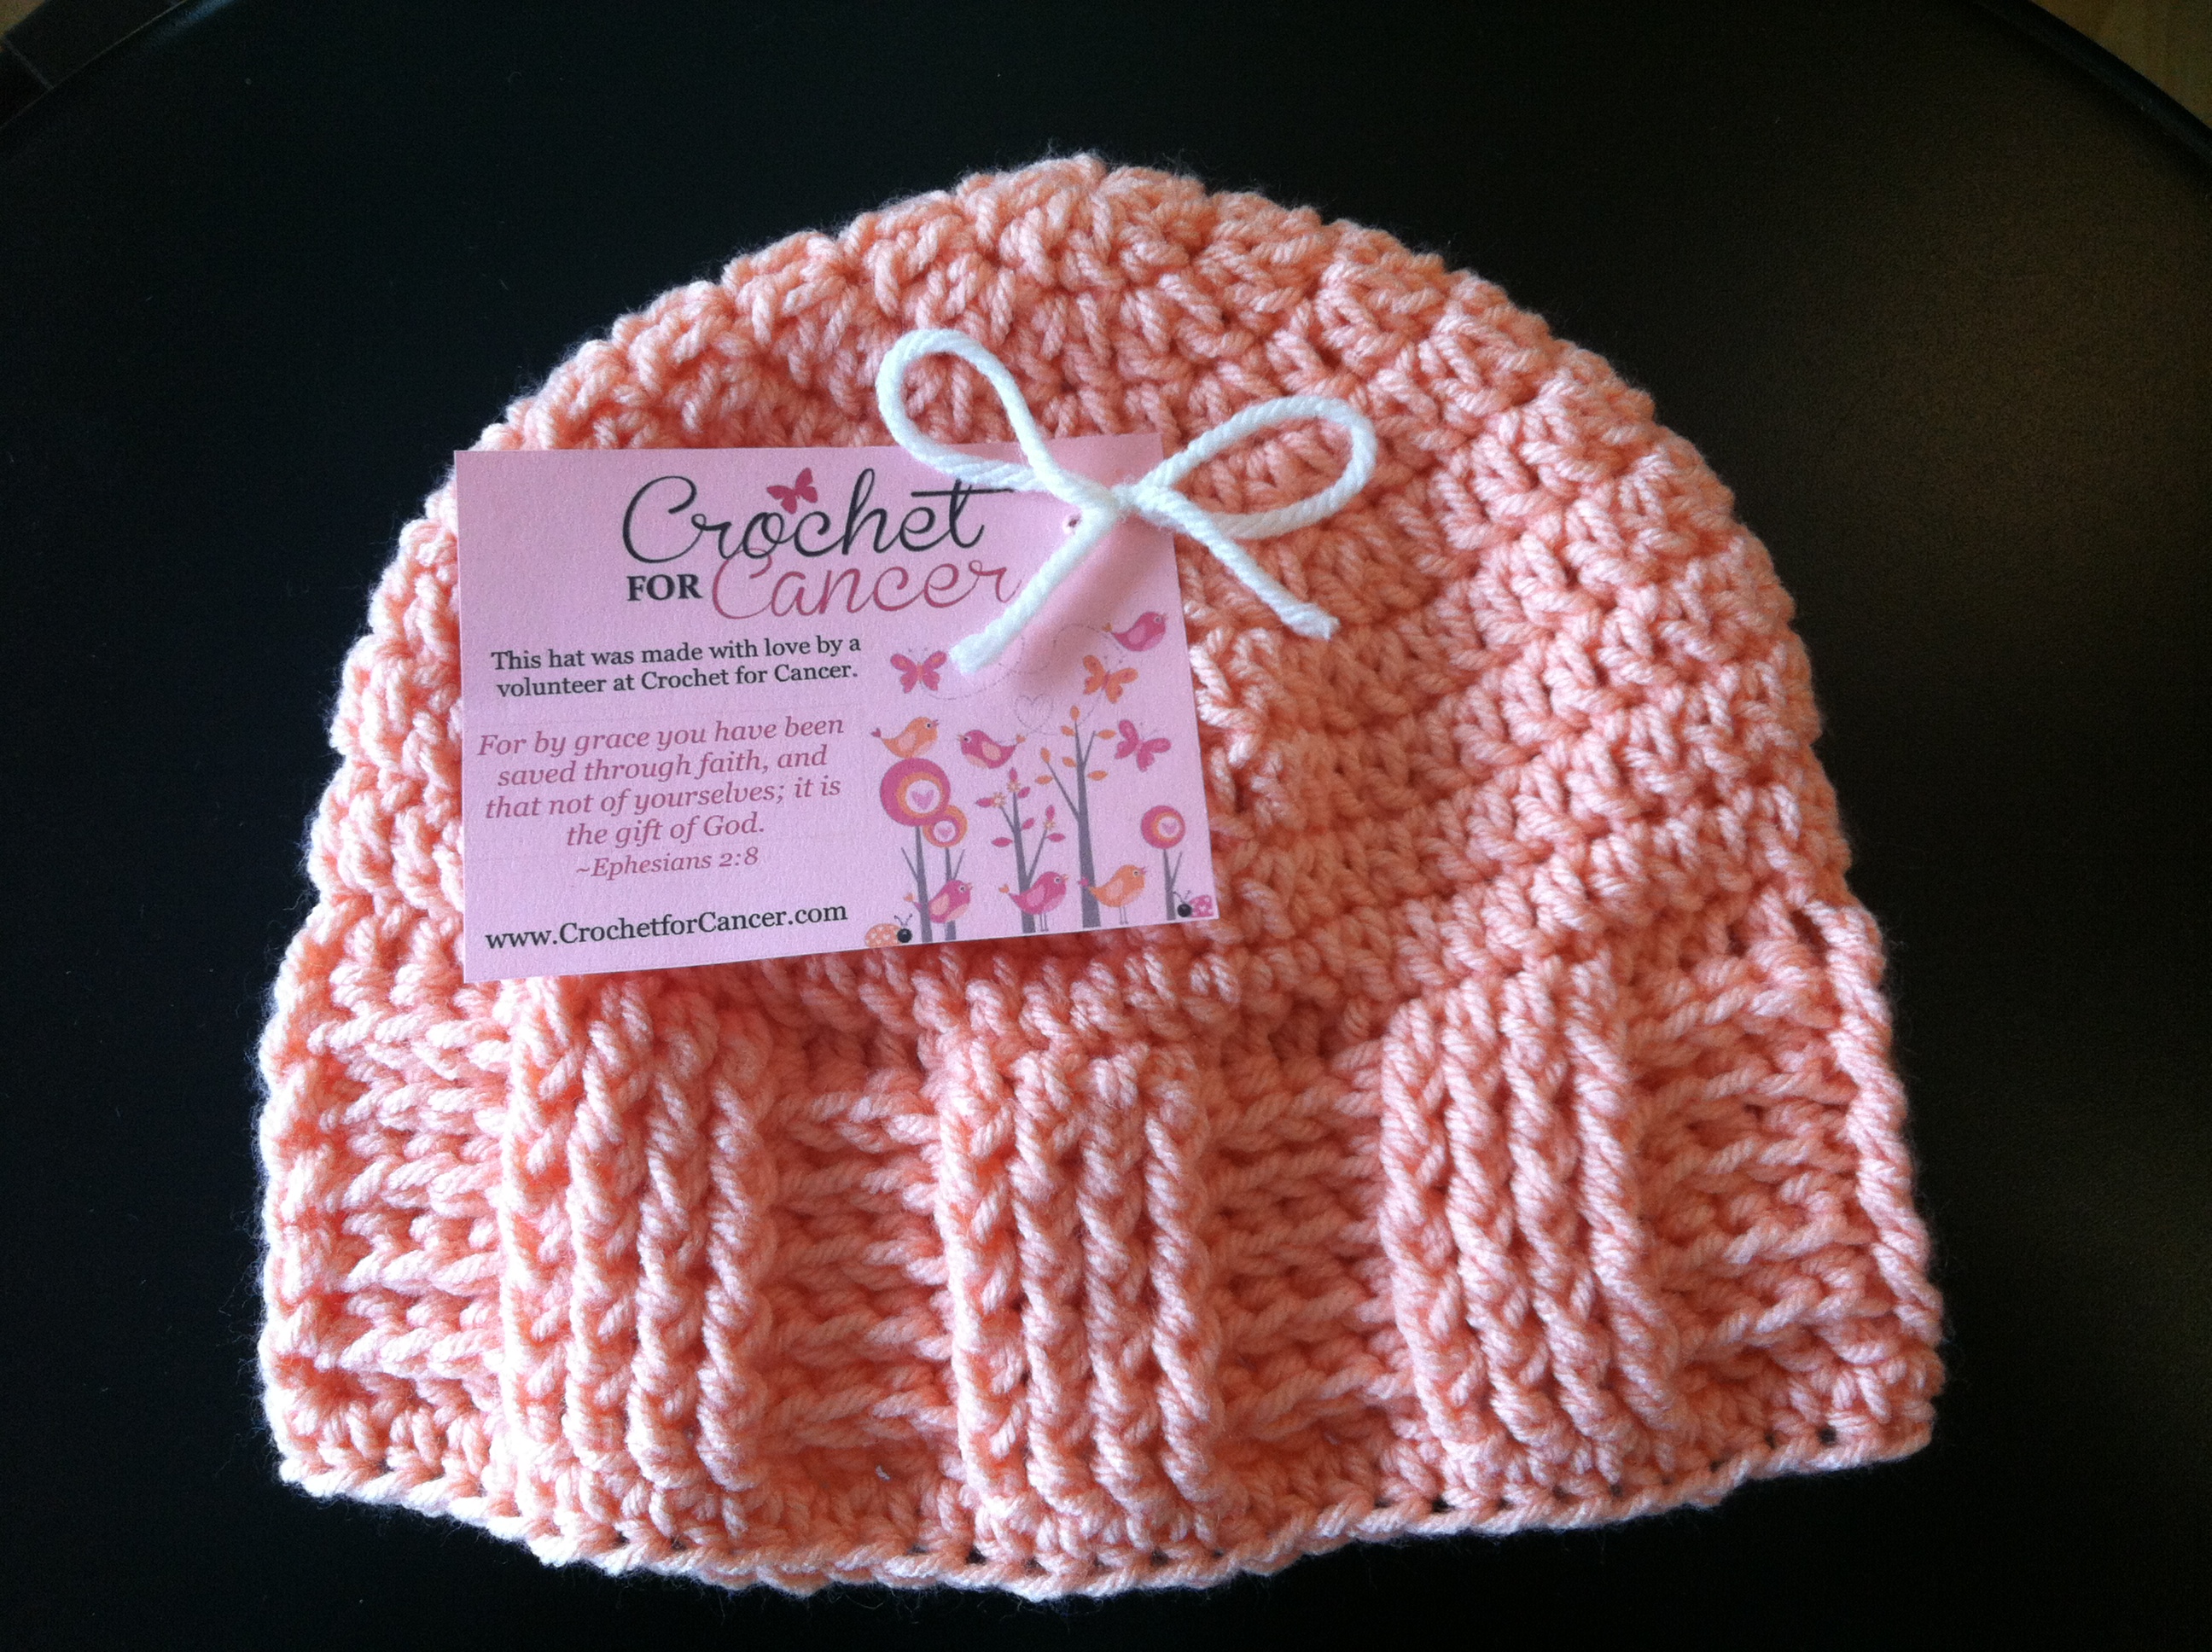 Crochet for Cancer’s Basketweave Vertical Stripe Cap